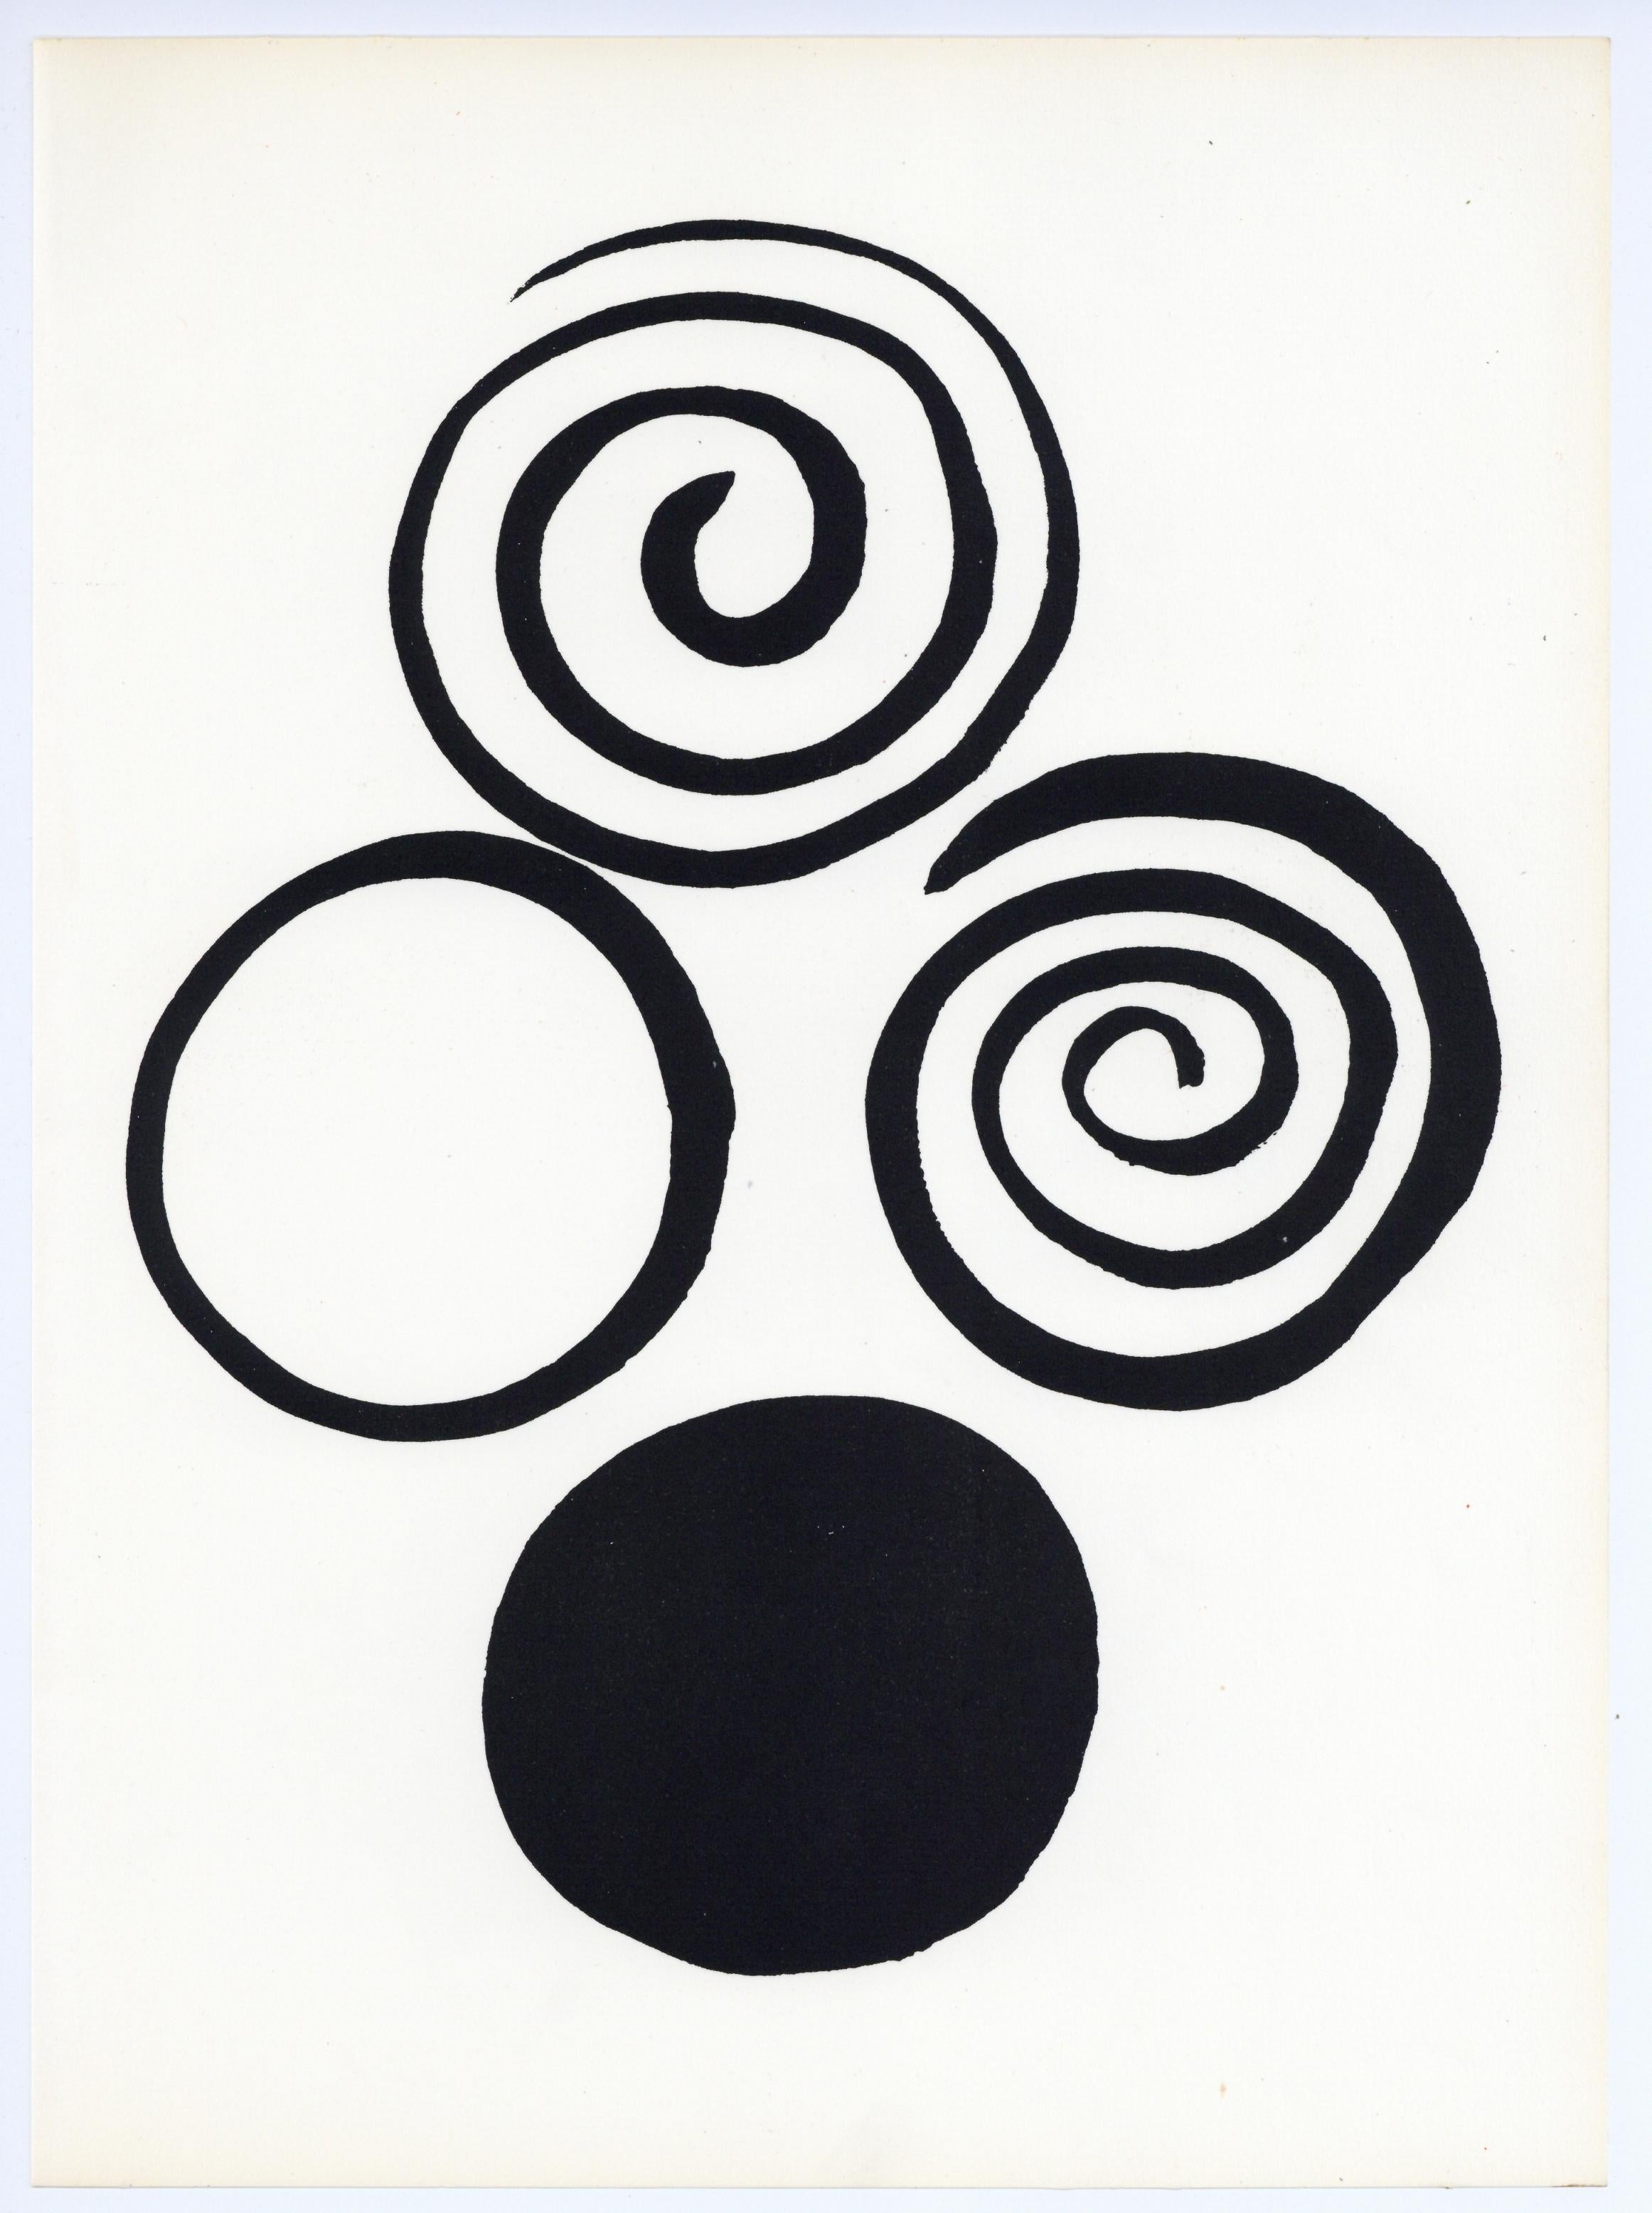 Alexander Calder Abstract Print - Calder, Composition, Musée National d'Art Moderne, Paris, 1965 (after)